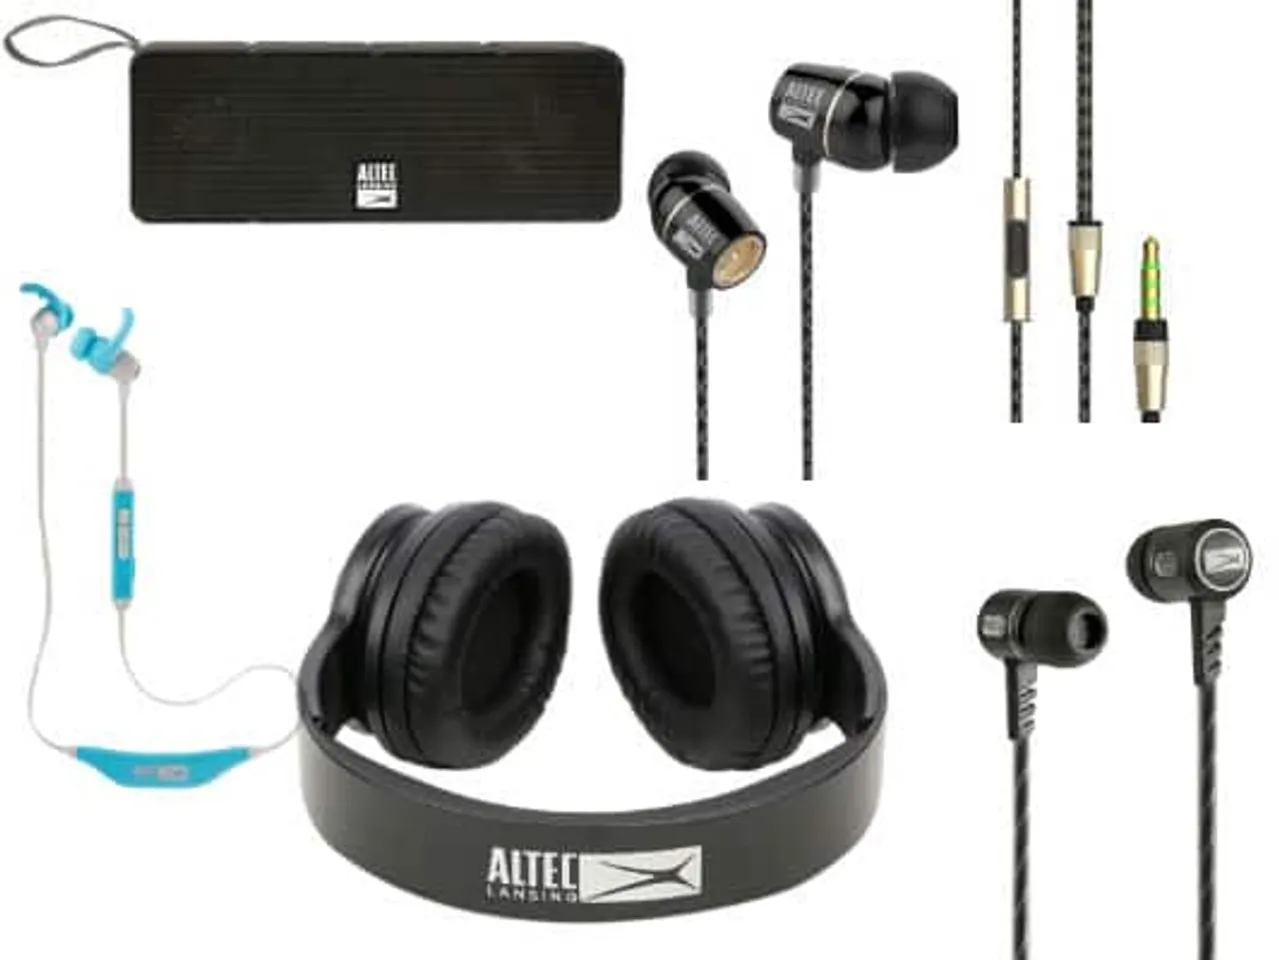 Altec Lansing Launches International Range of Audio Devices